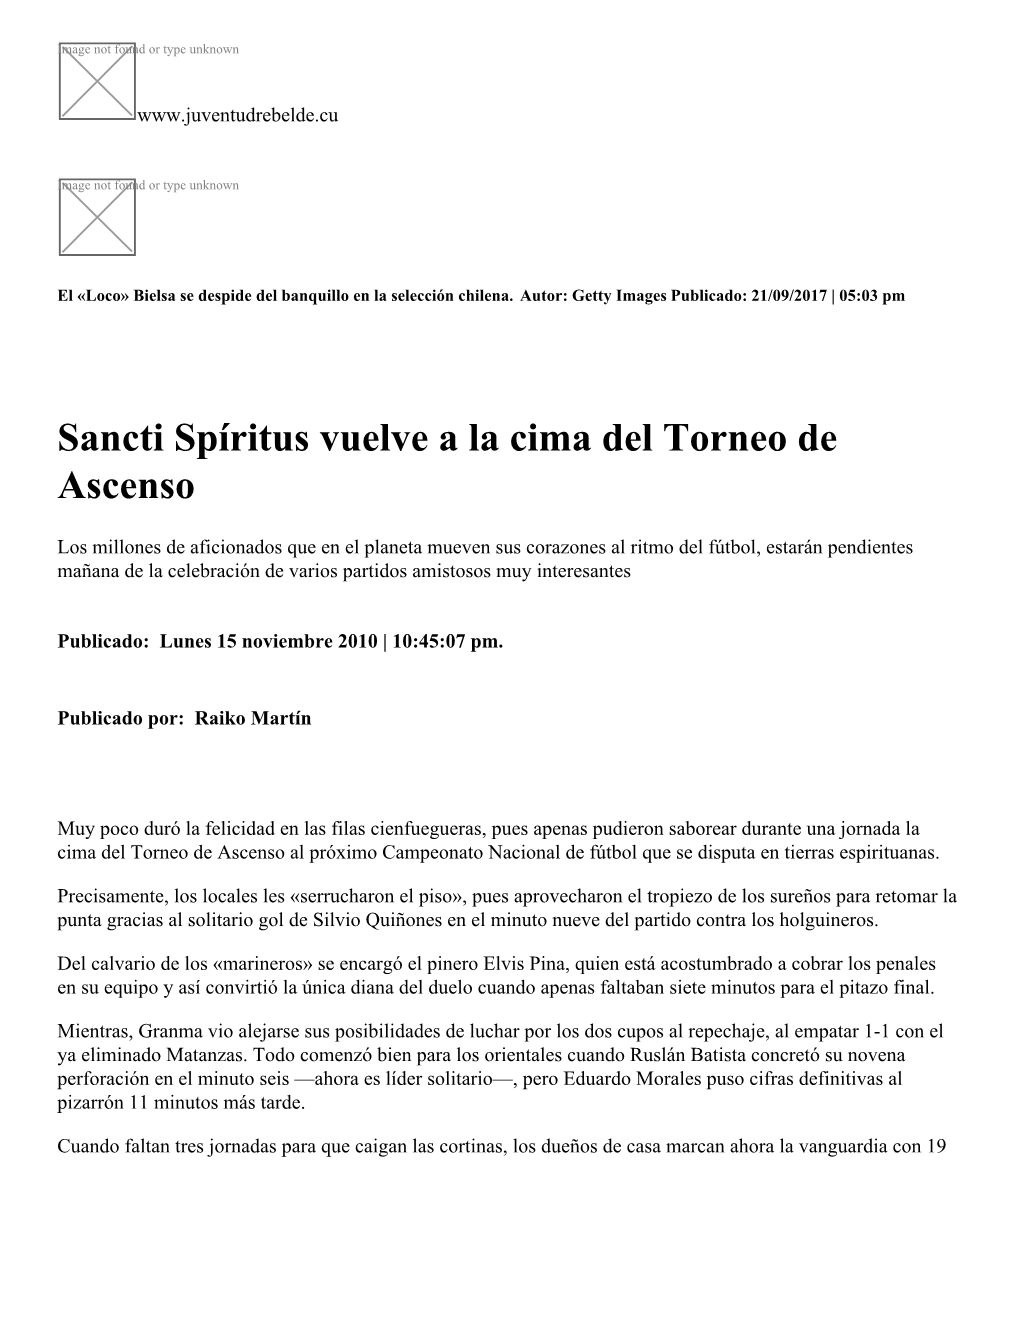 Sancti Spíritus Vuelve a La Cima Del Torneo De Ascenso